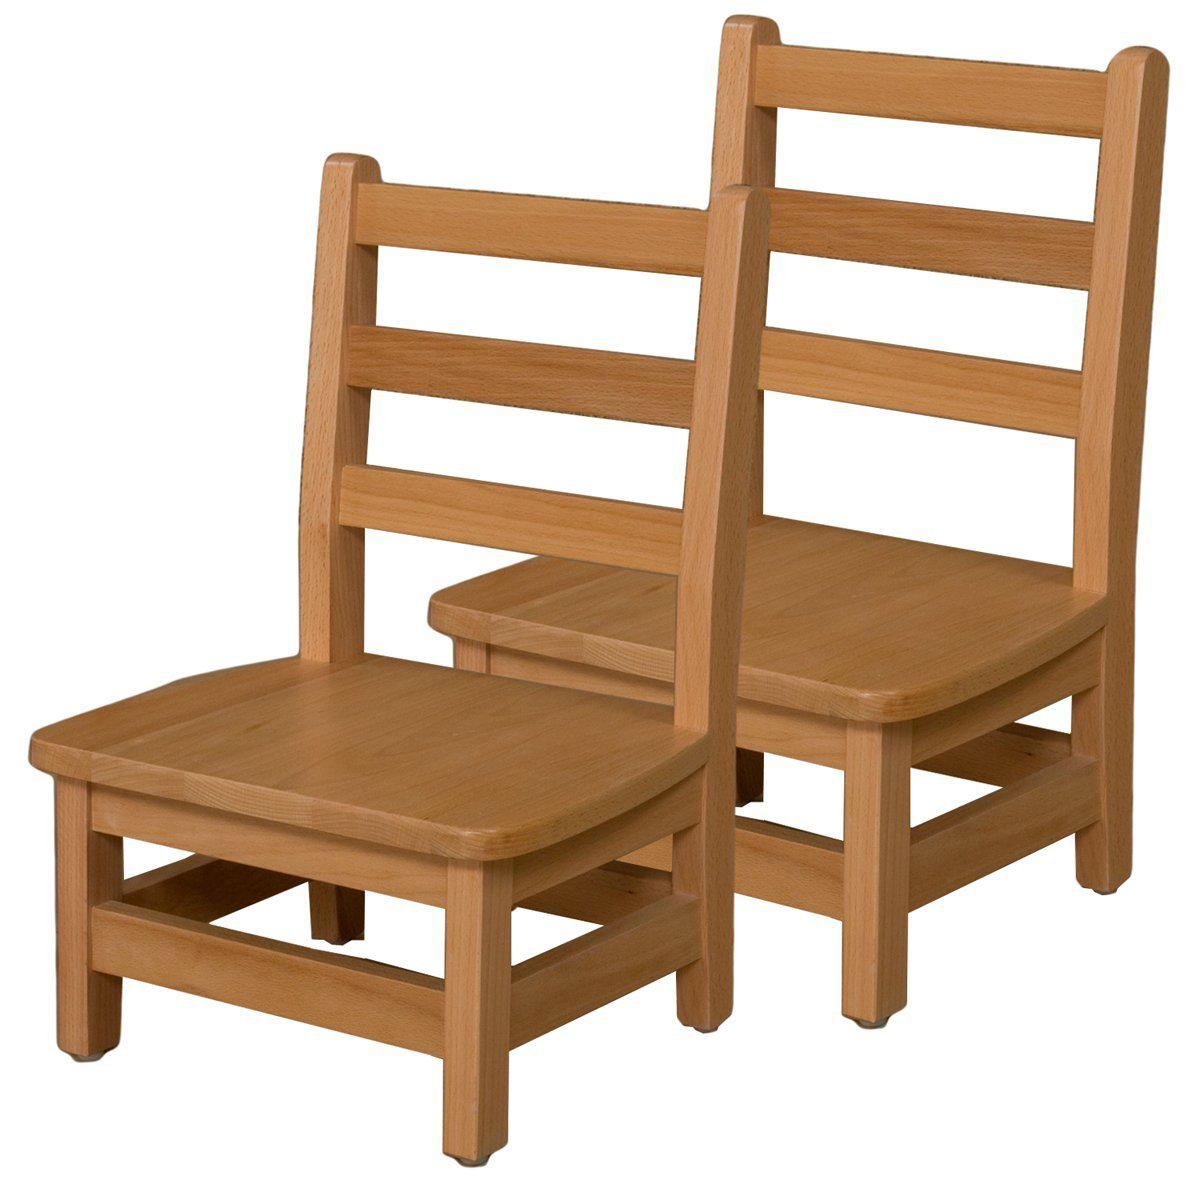 Wood Designs Hardwood Ladderback Chairs, Carton of 2-Chairs-8"-